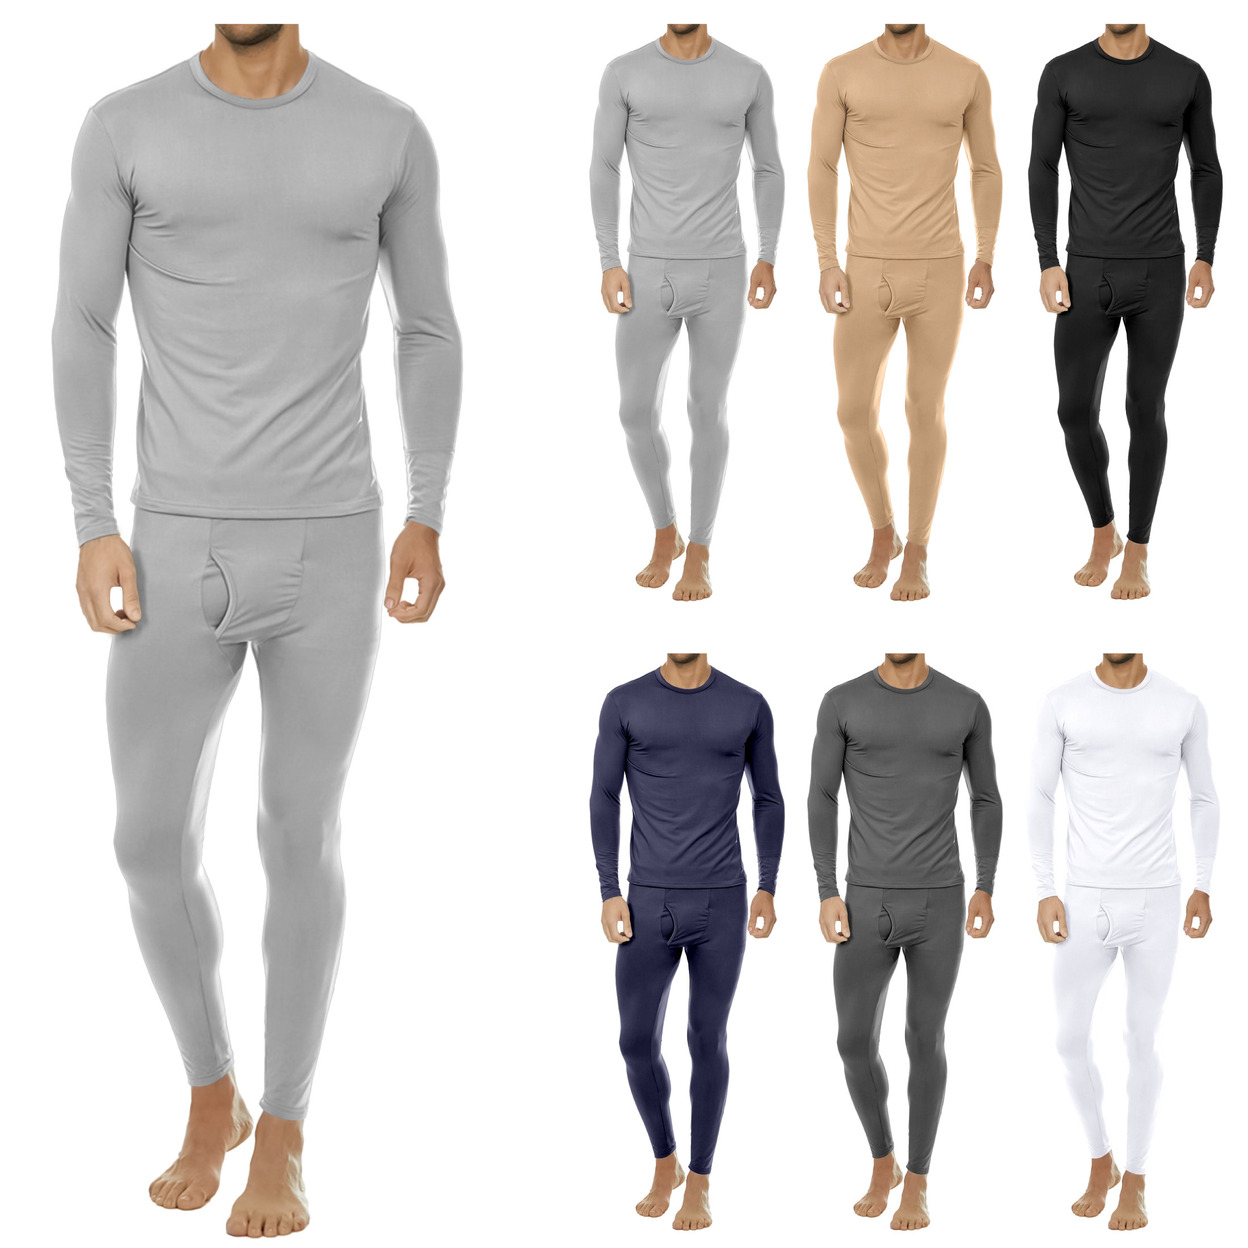 2-Sets: Men's Winter Warm Fleece Lined Thermal Underwear Set For Cold Weather - Black&white, Medium